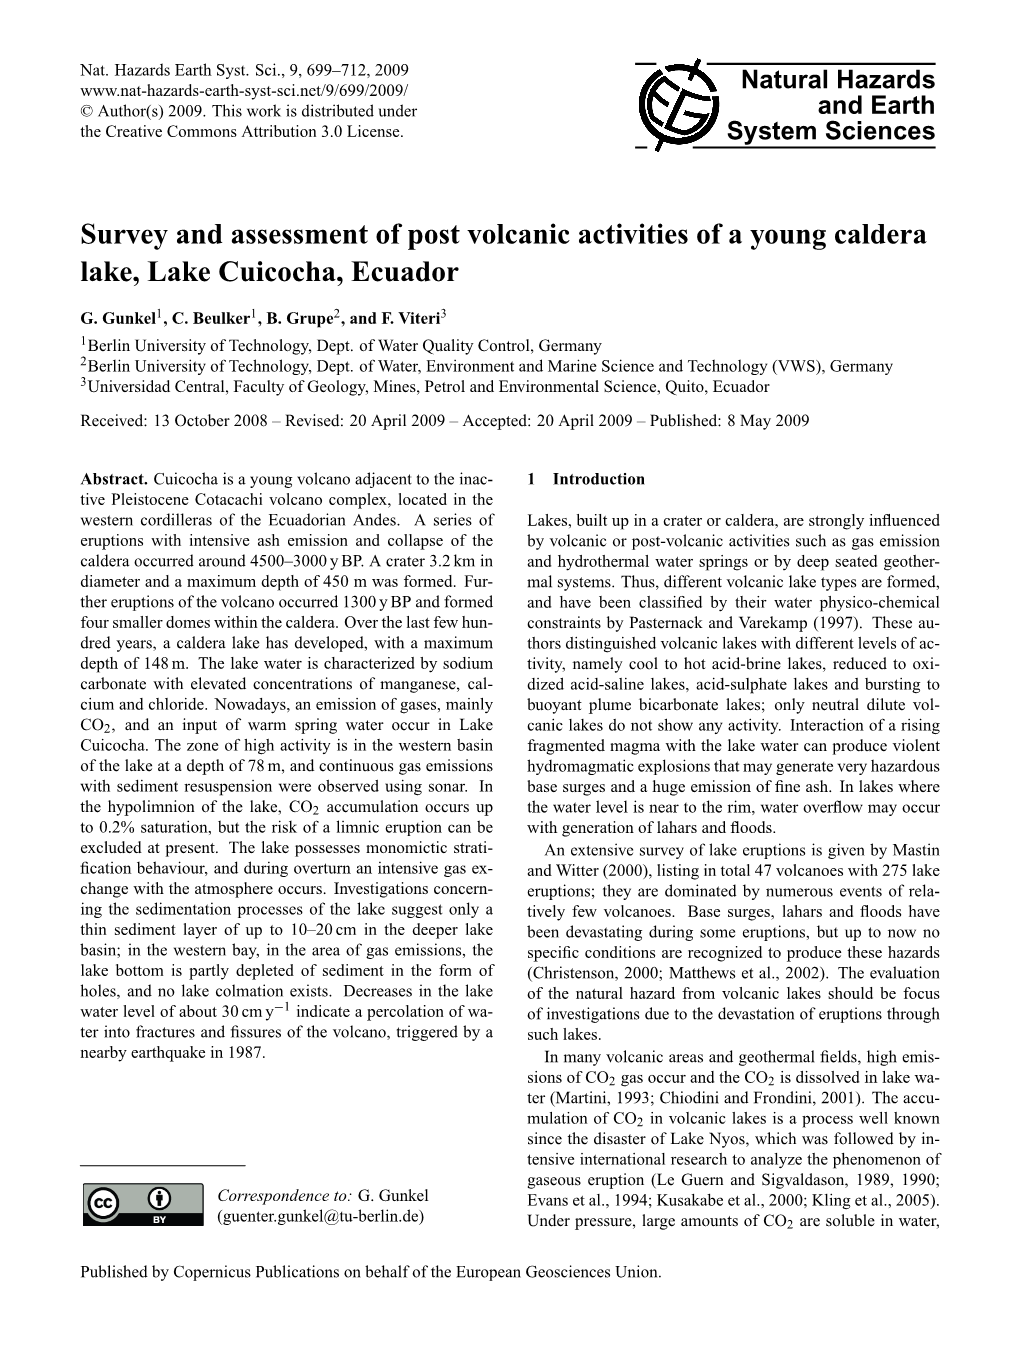 Survey and Assessment of Post Volcanic Activities of a Young Caldera Lake, Lake Cuicocha, Ecuador